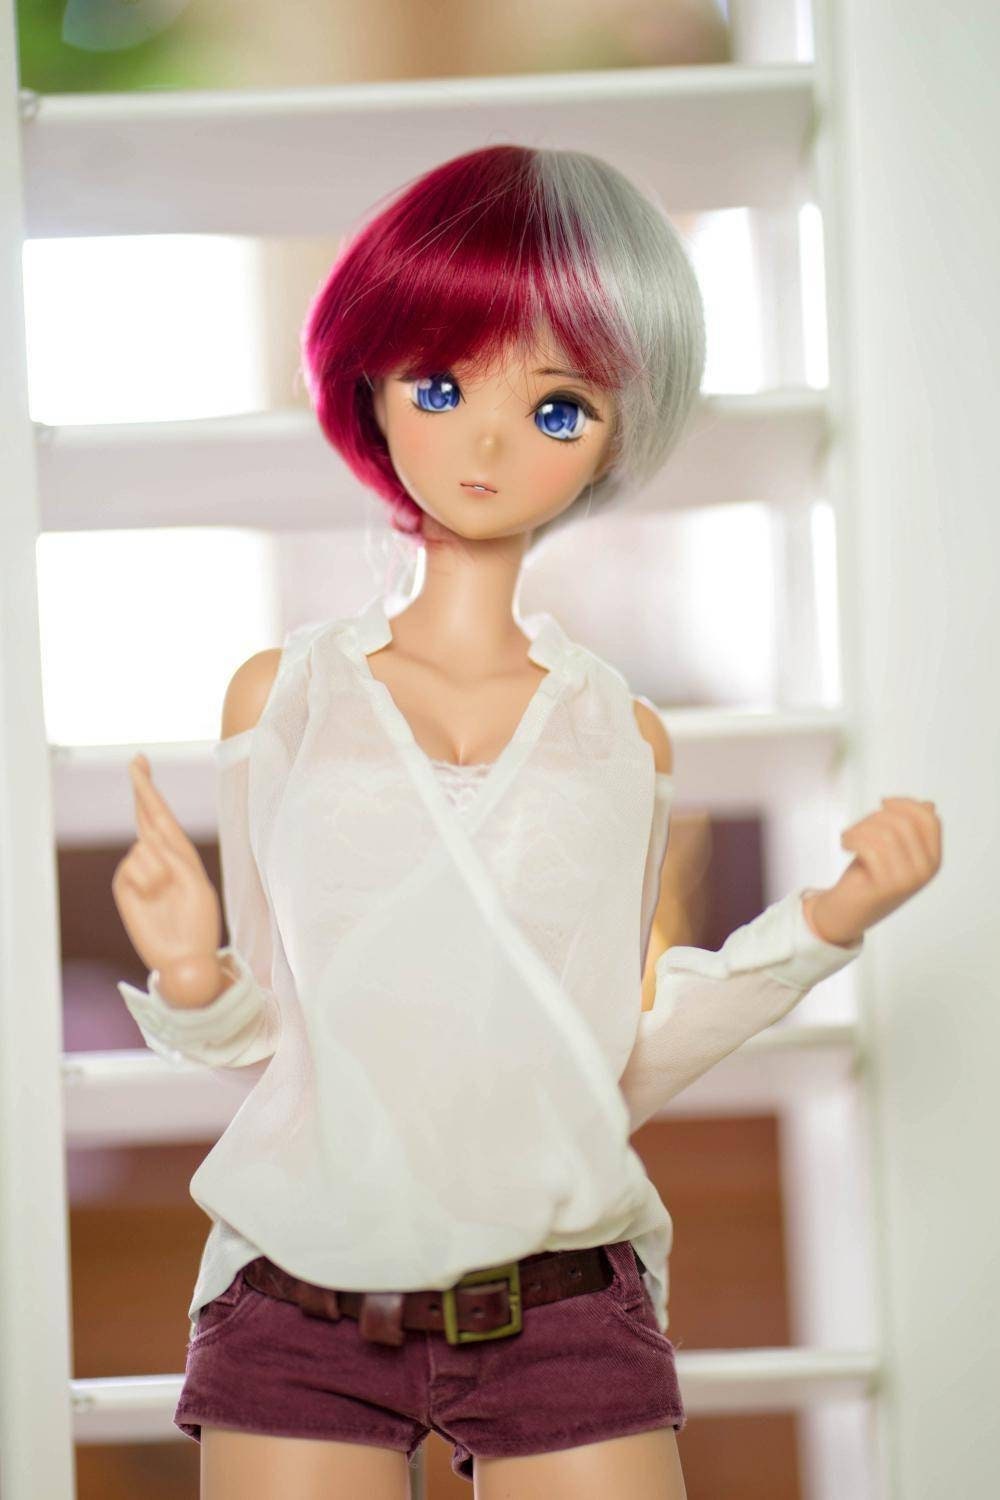 Custom doll WIG for Smart Dolls- Heat Safe - Tangle Resistant- 8" head size of Bjd, SD, Dollfie Dream dolls Boy  anime Limited